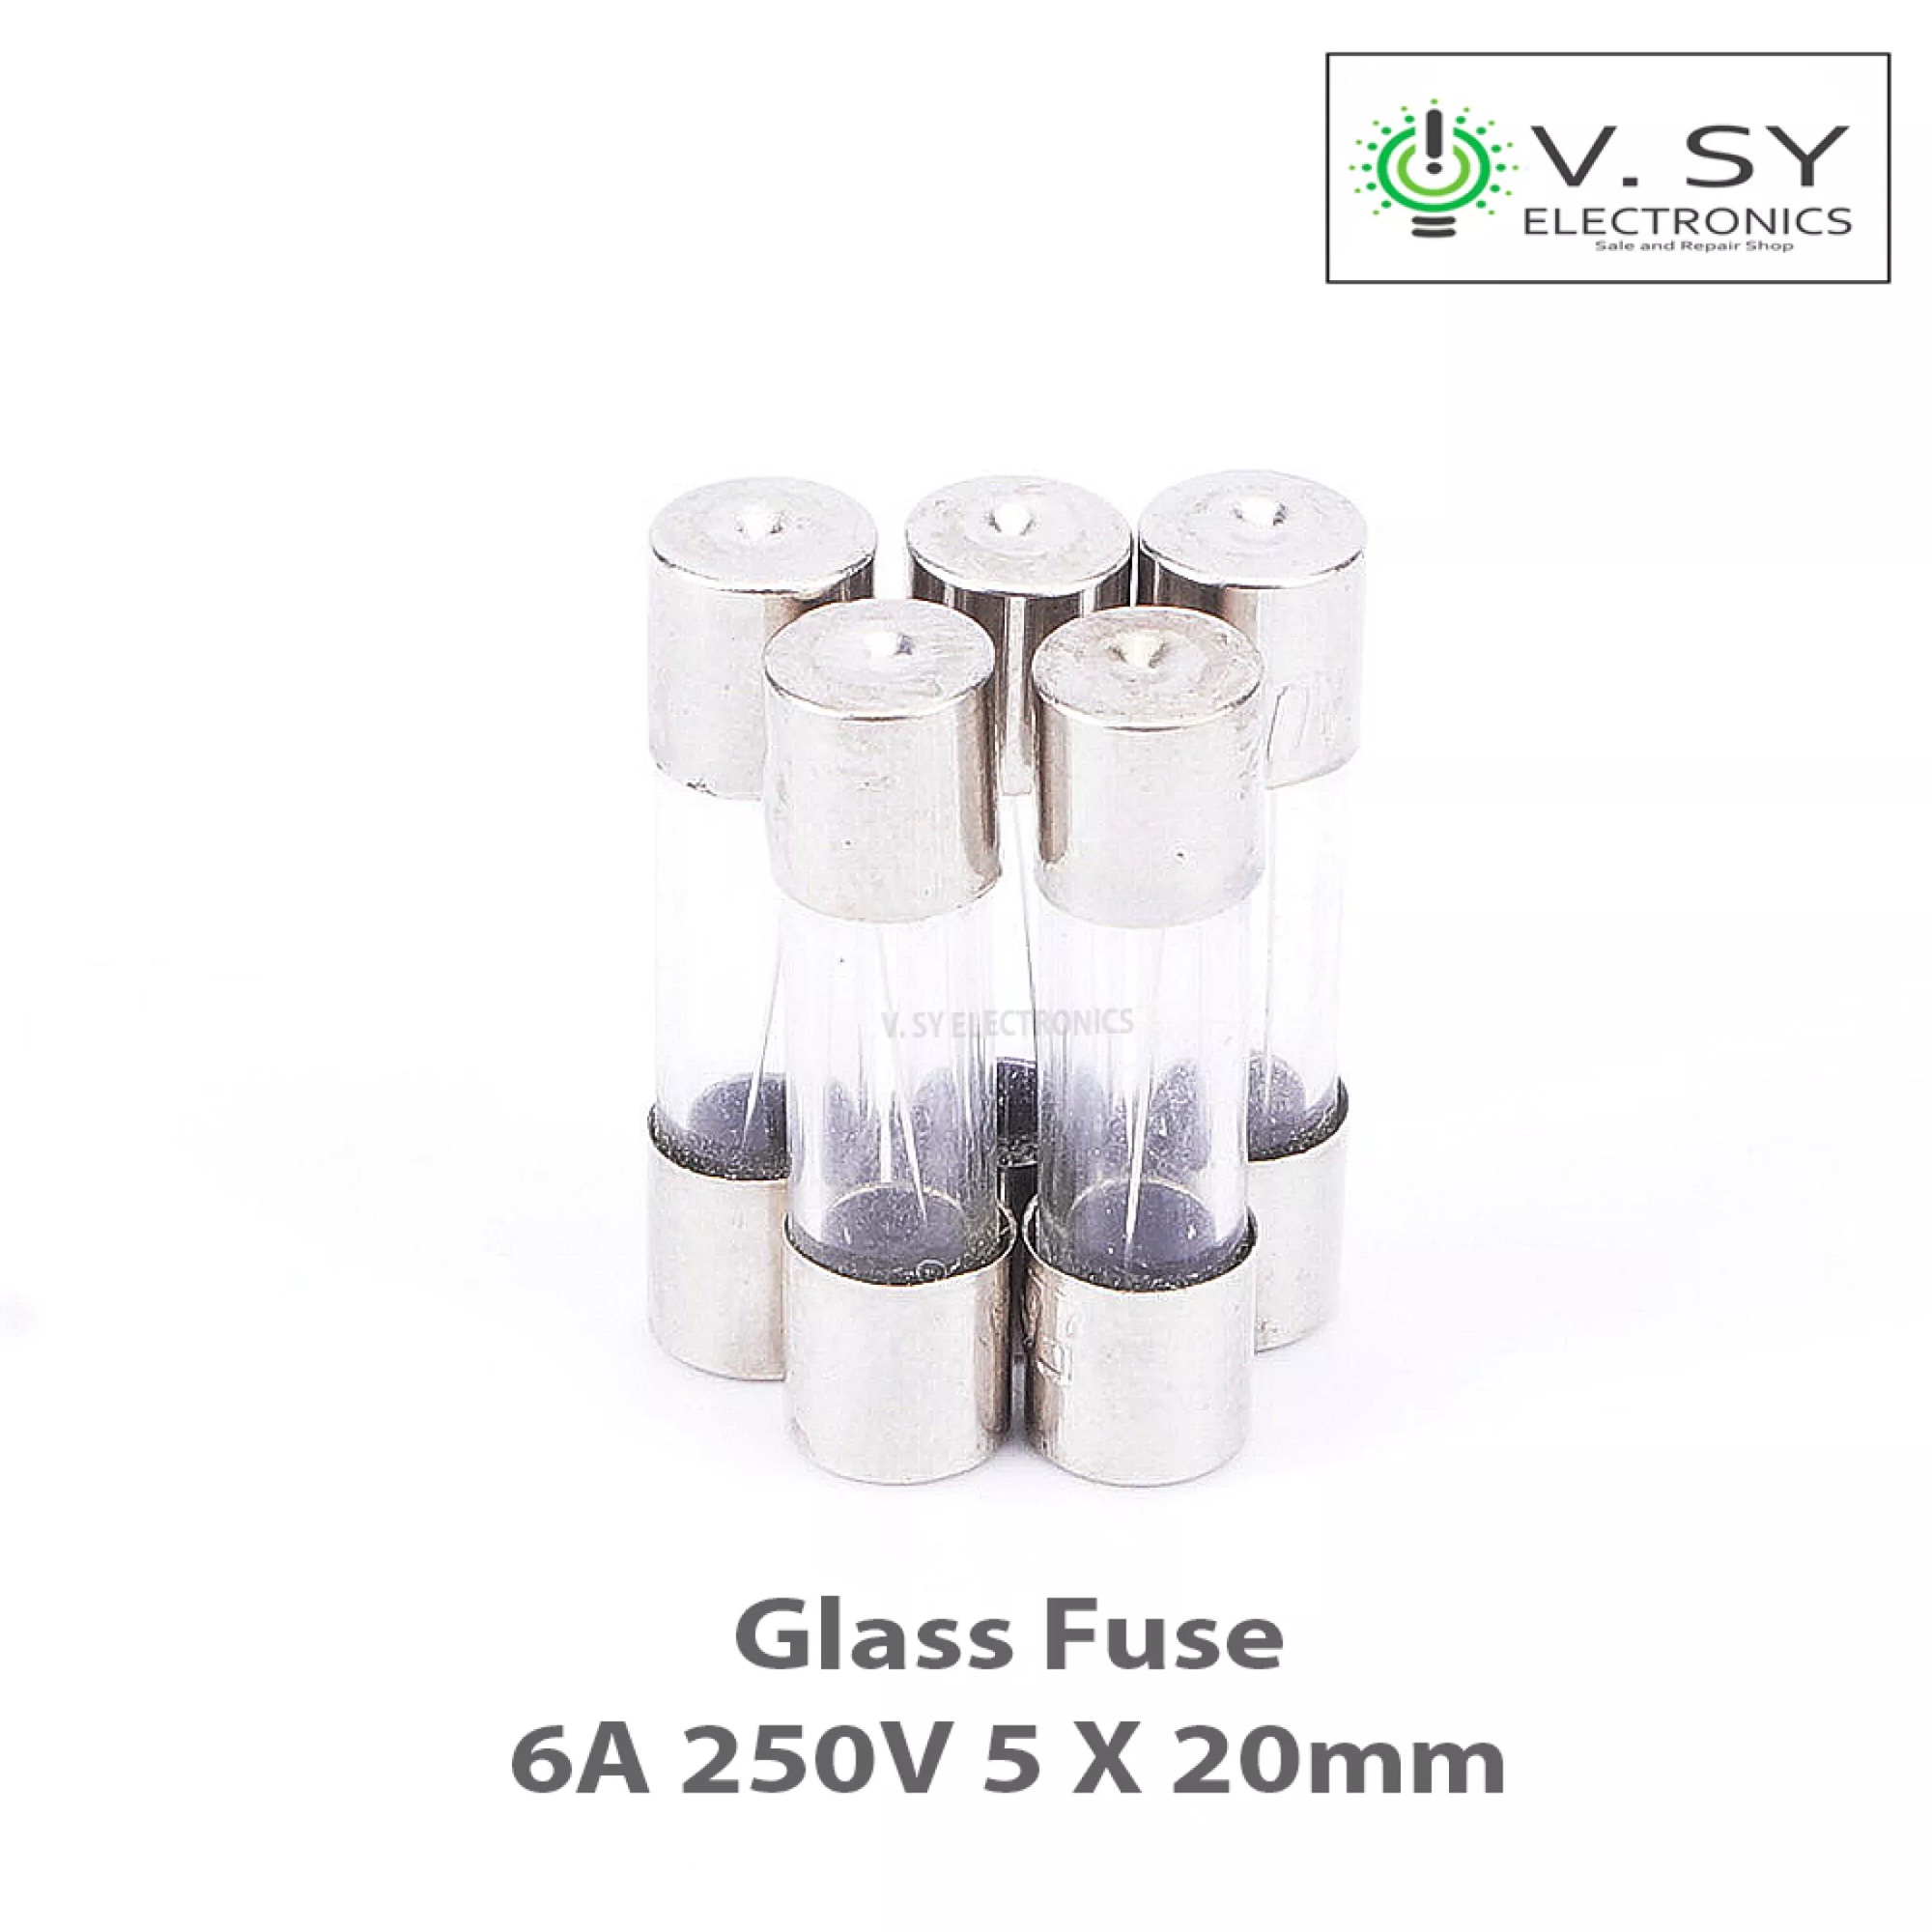 1.5A Homyl Pack of 100 pcs Fast-Blow Fuse 250V Glass Fuses 5 x 20 mm 